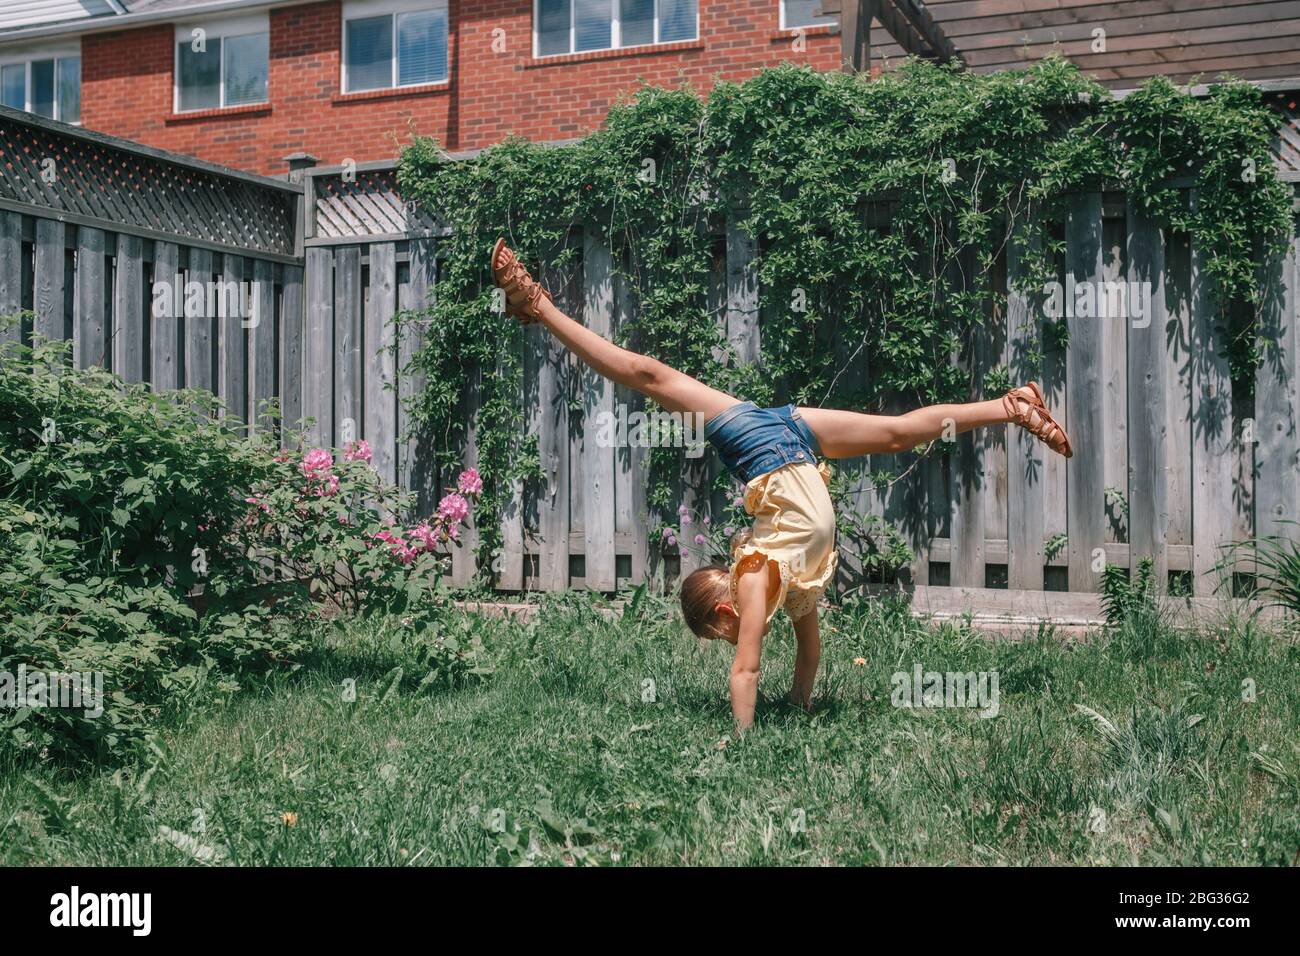 Funny child teenage girl doing cartwheel upside down stand. Excited joyful kid playing outdoor. Happy lifestyle childhood and freedom spirit. Stock Photo